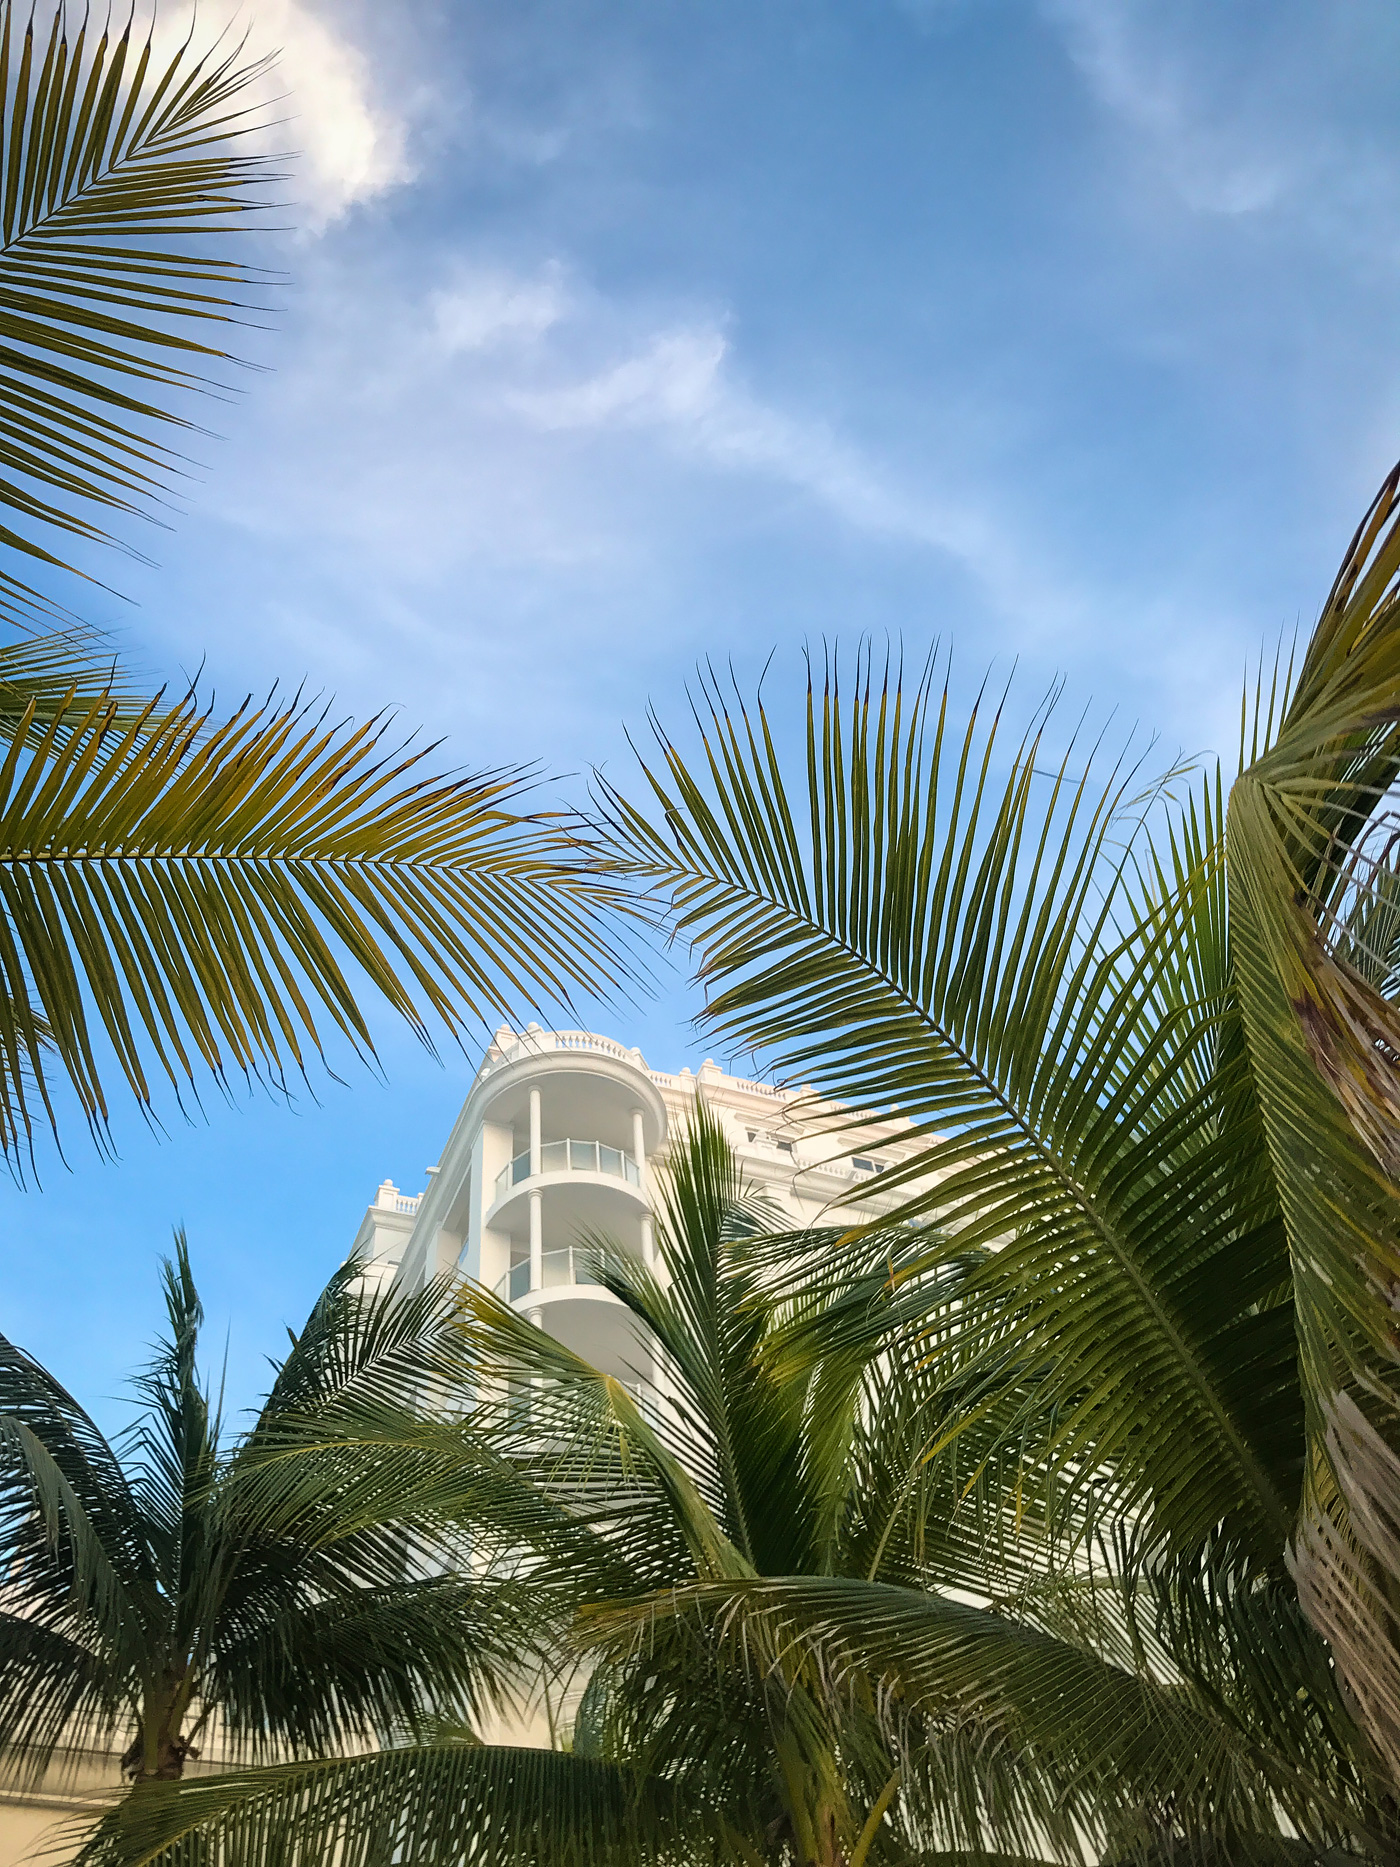 Cancun Luxury All-Inclusive Resort - Riu Palace Las Americas